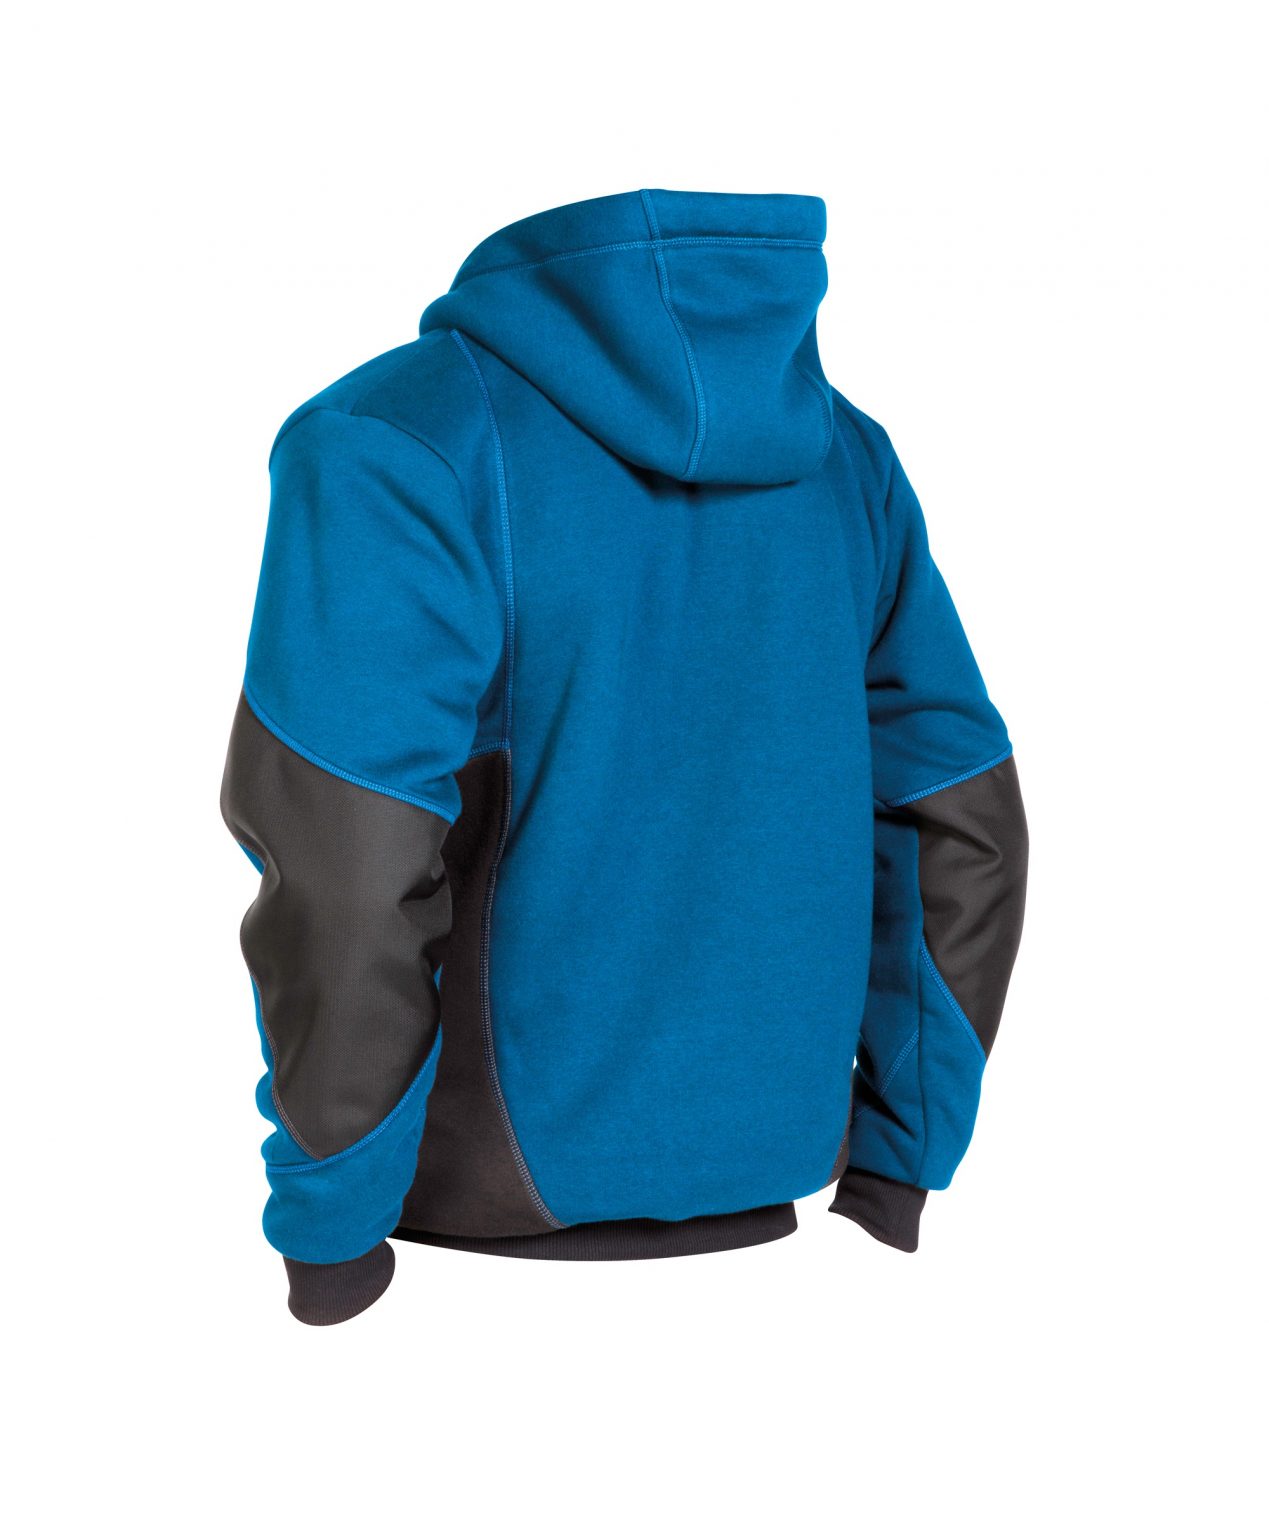 pulse sweatshirt jacket azure blue anthracite grey detail 2